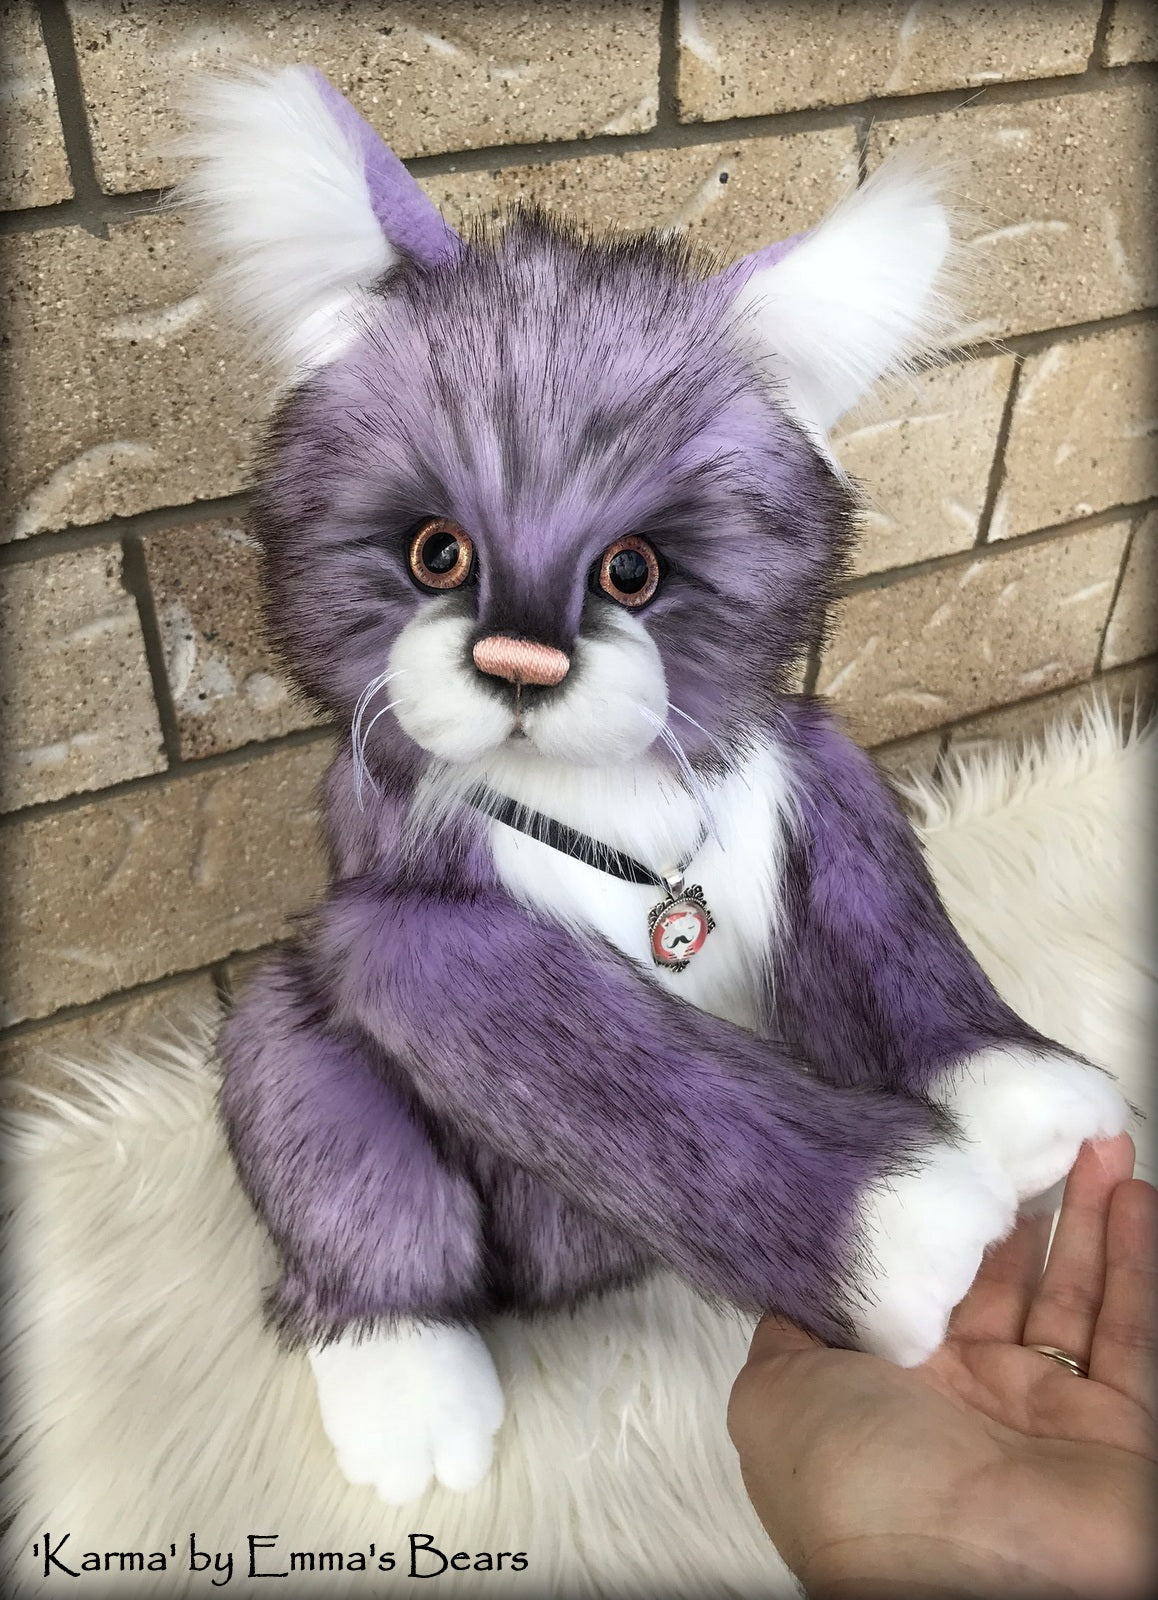 Karma - 13" soft sculpture faux fur cat by Emmas Bears - OOAK